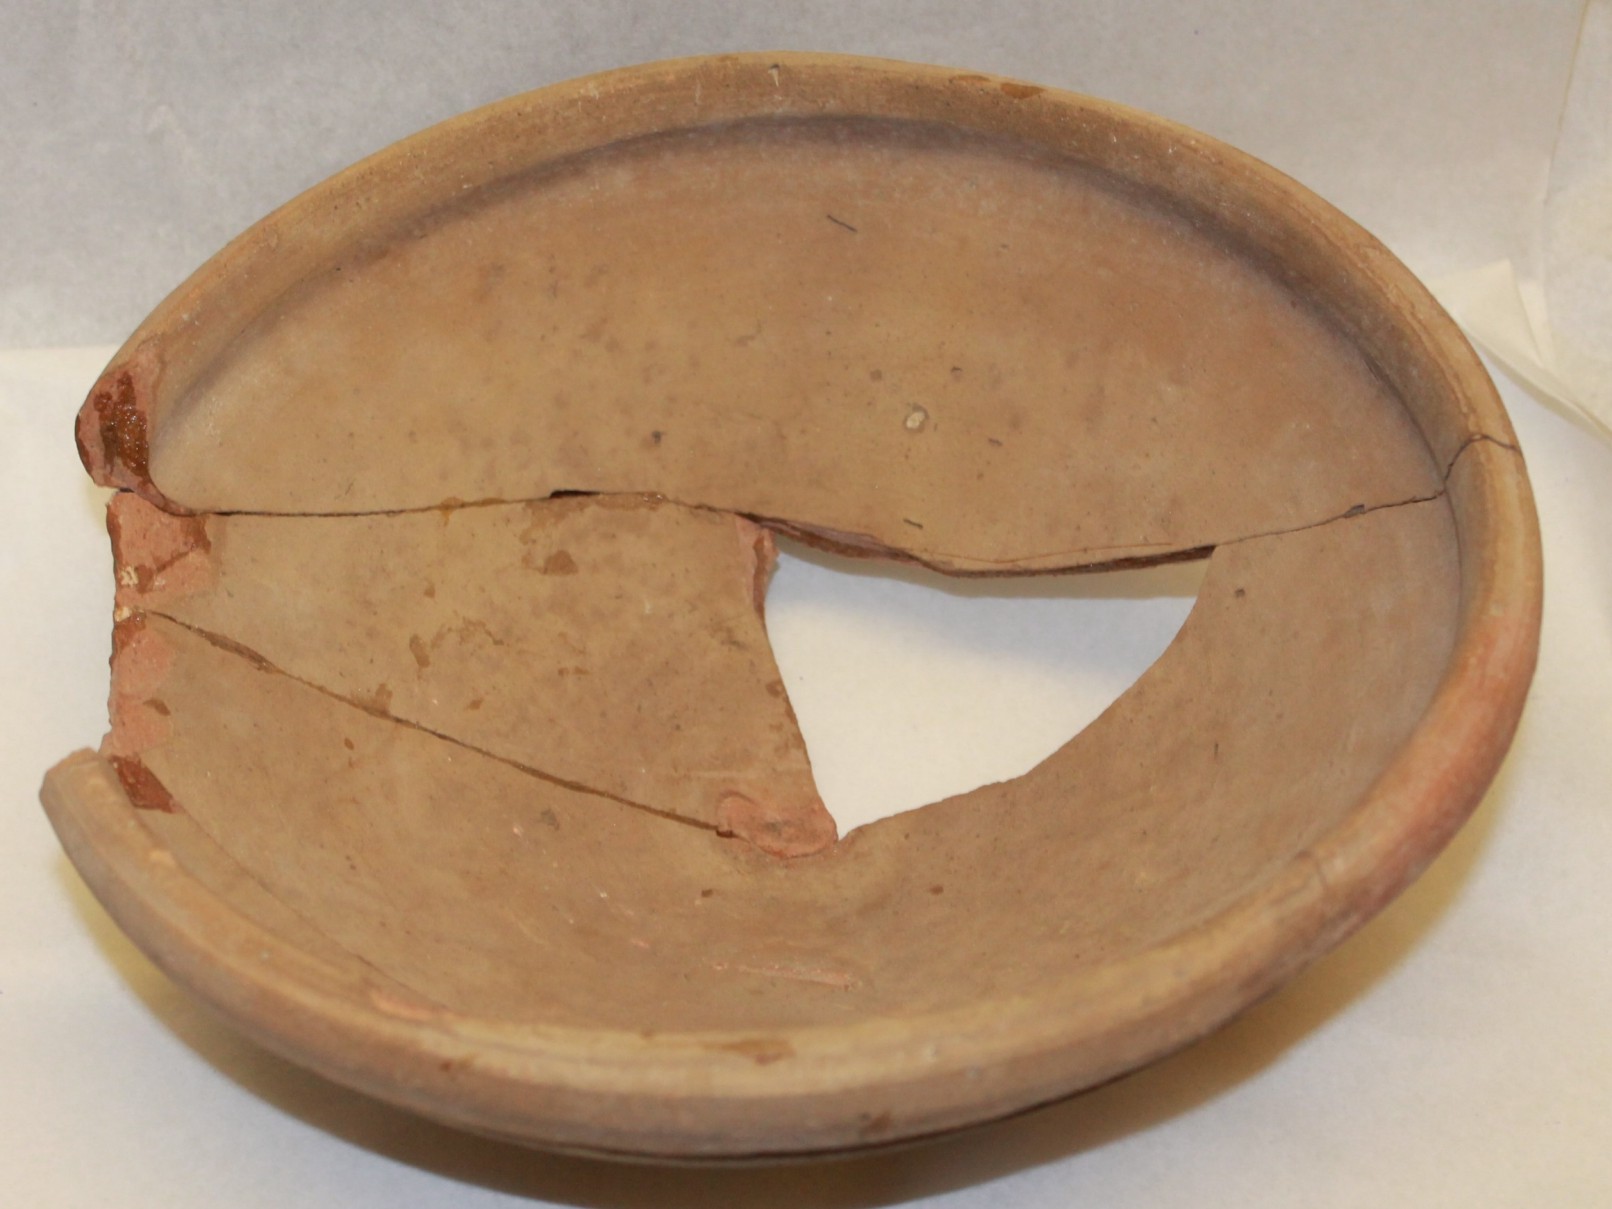 Image for: Medium open bowl